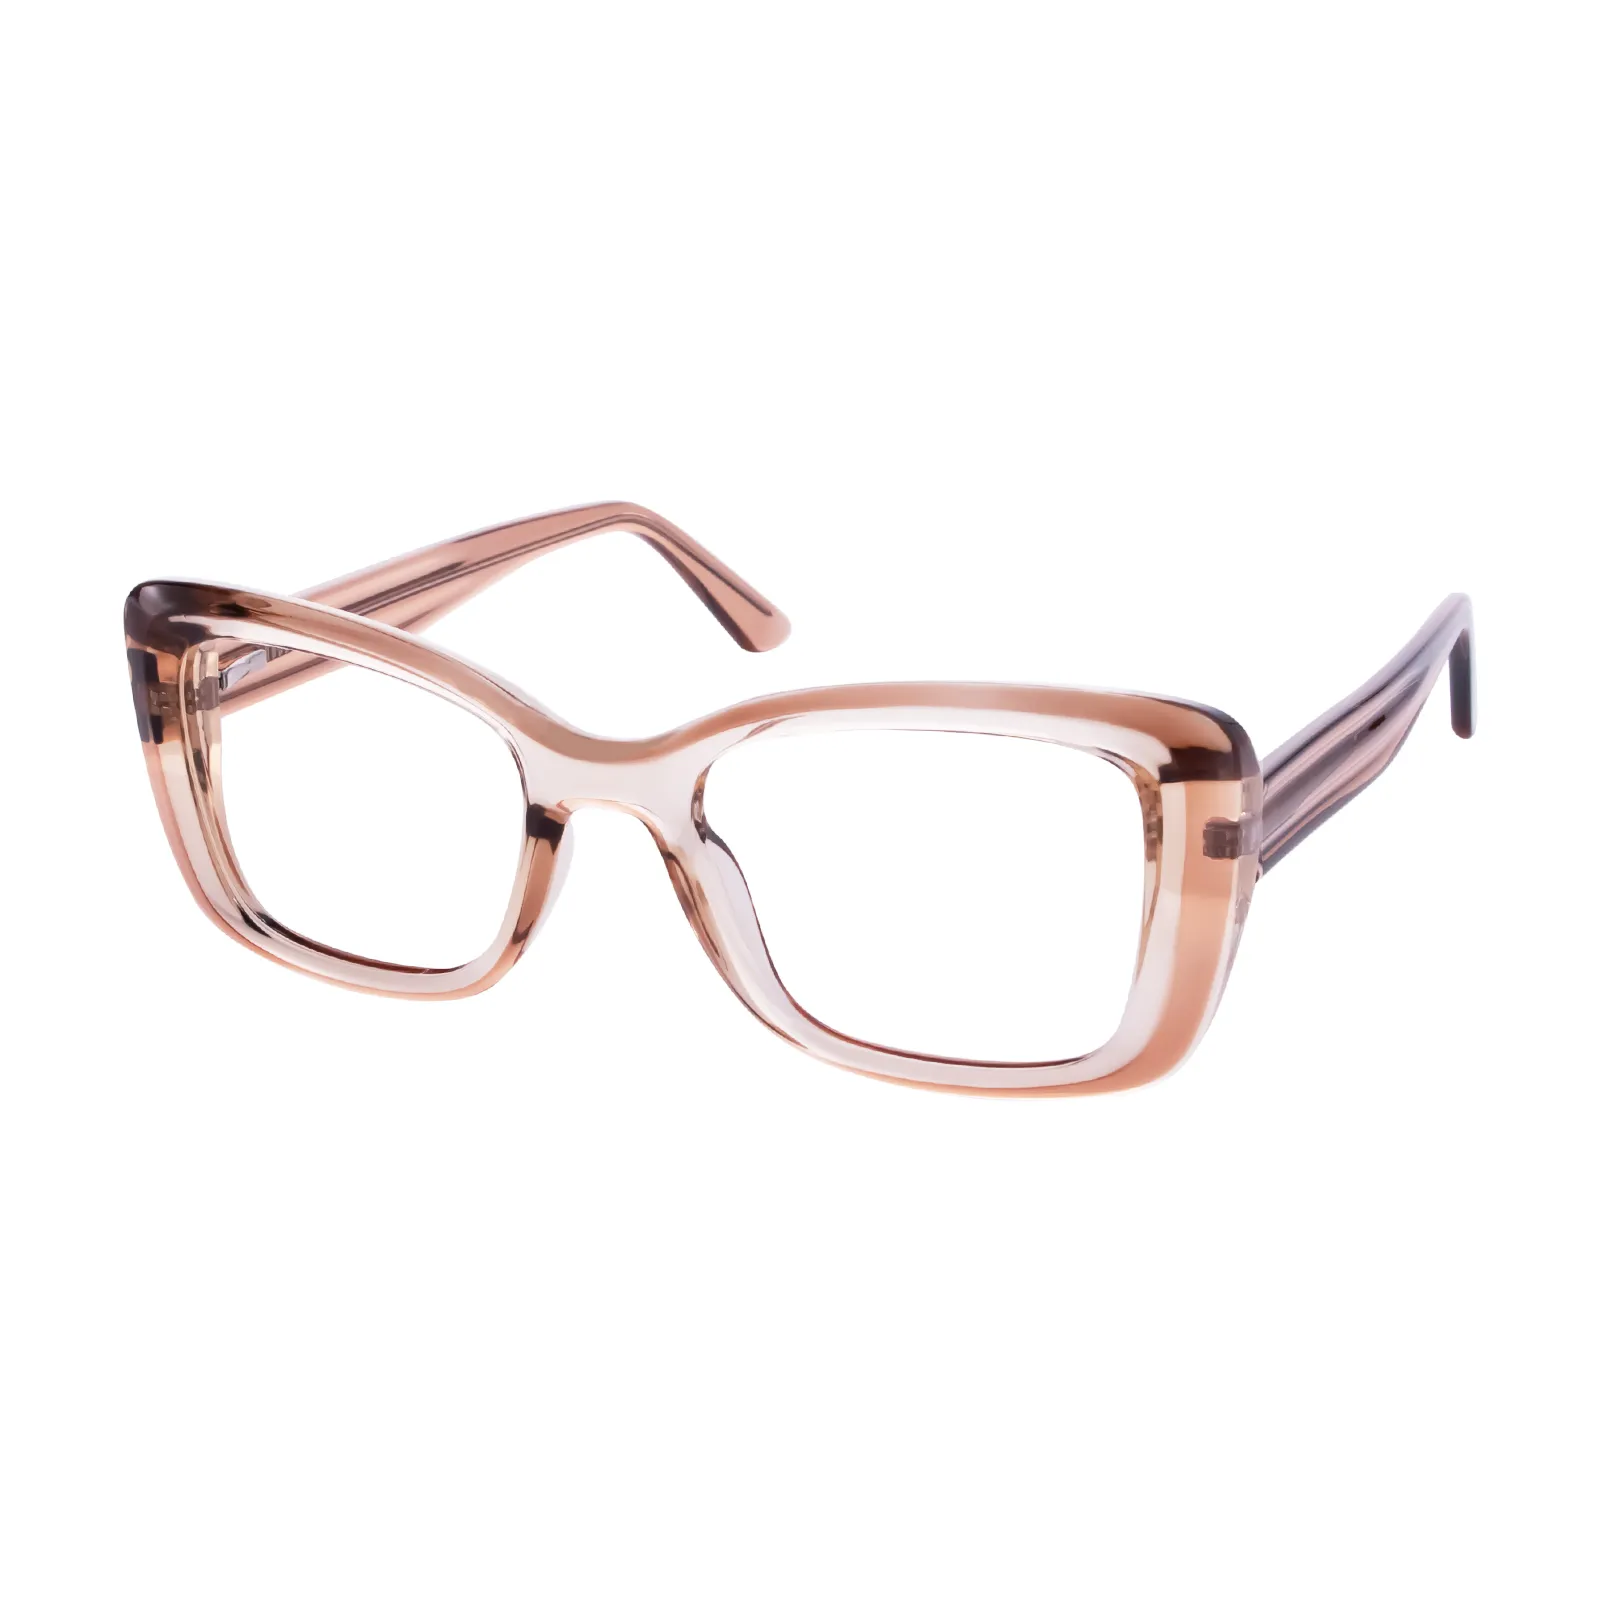 Maggie - Square Brown Glasses for Women